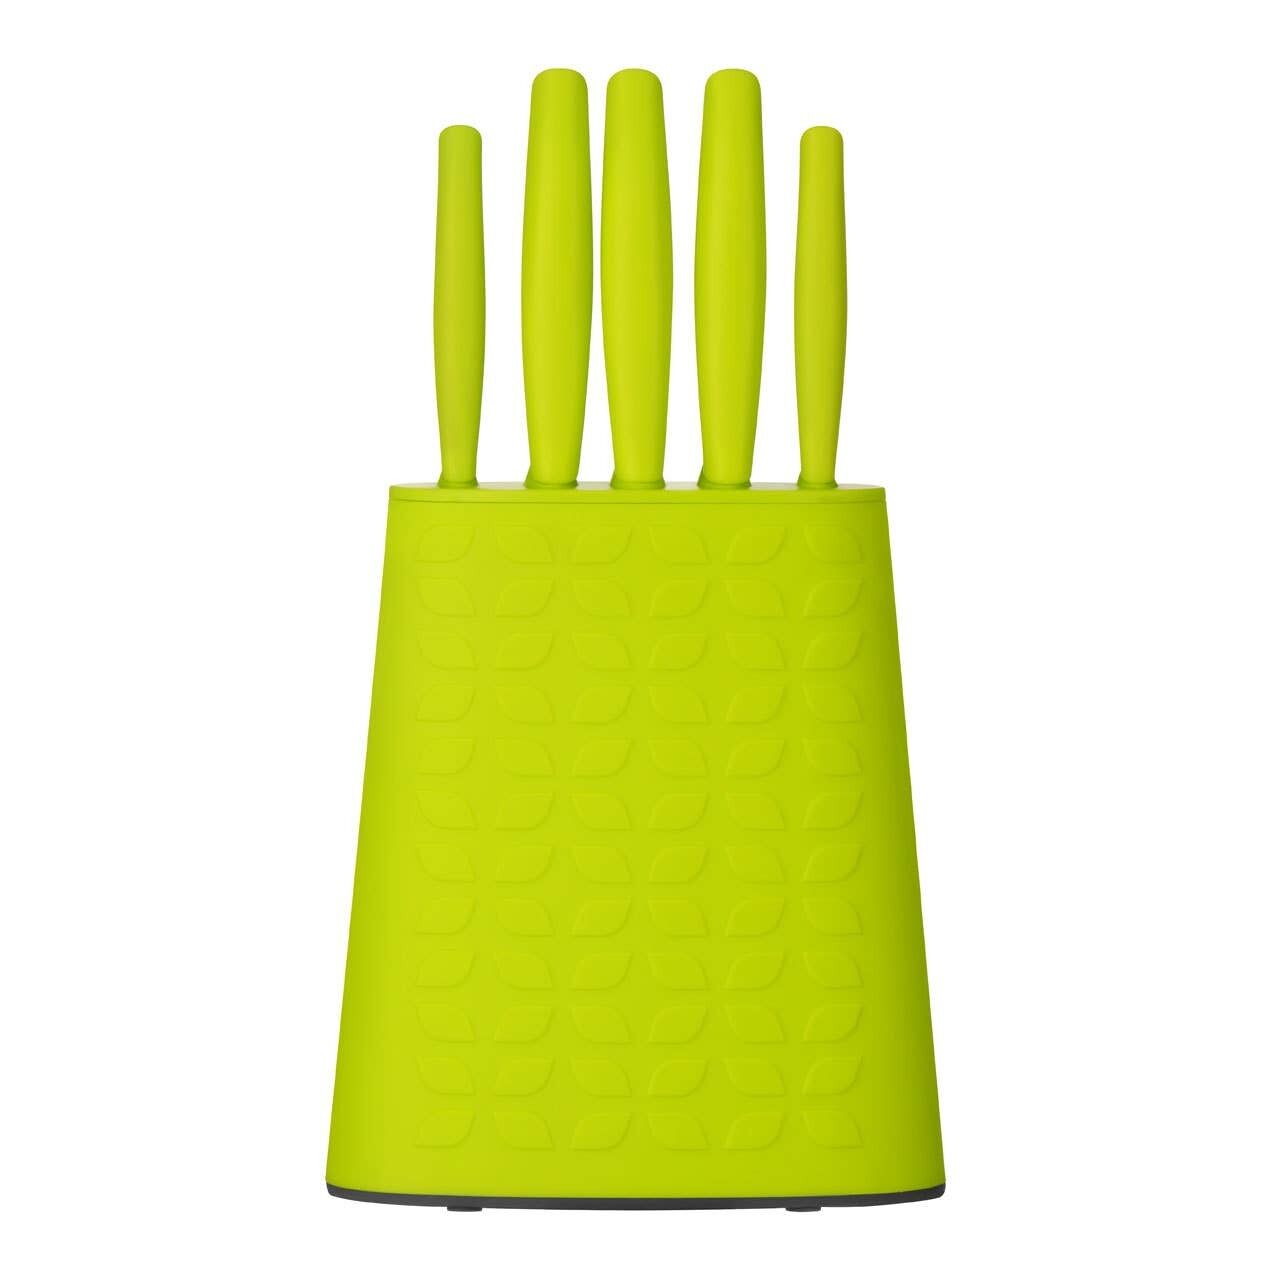 Buy wholesale 5pc Lime Green Knife Block Set